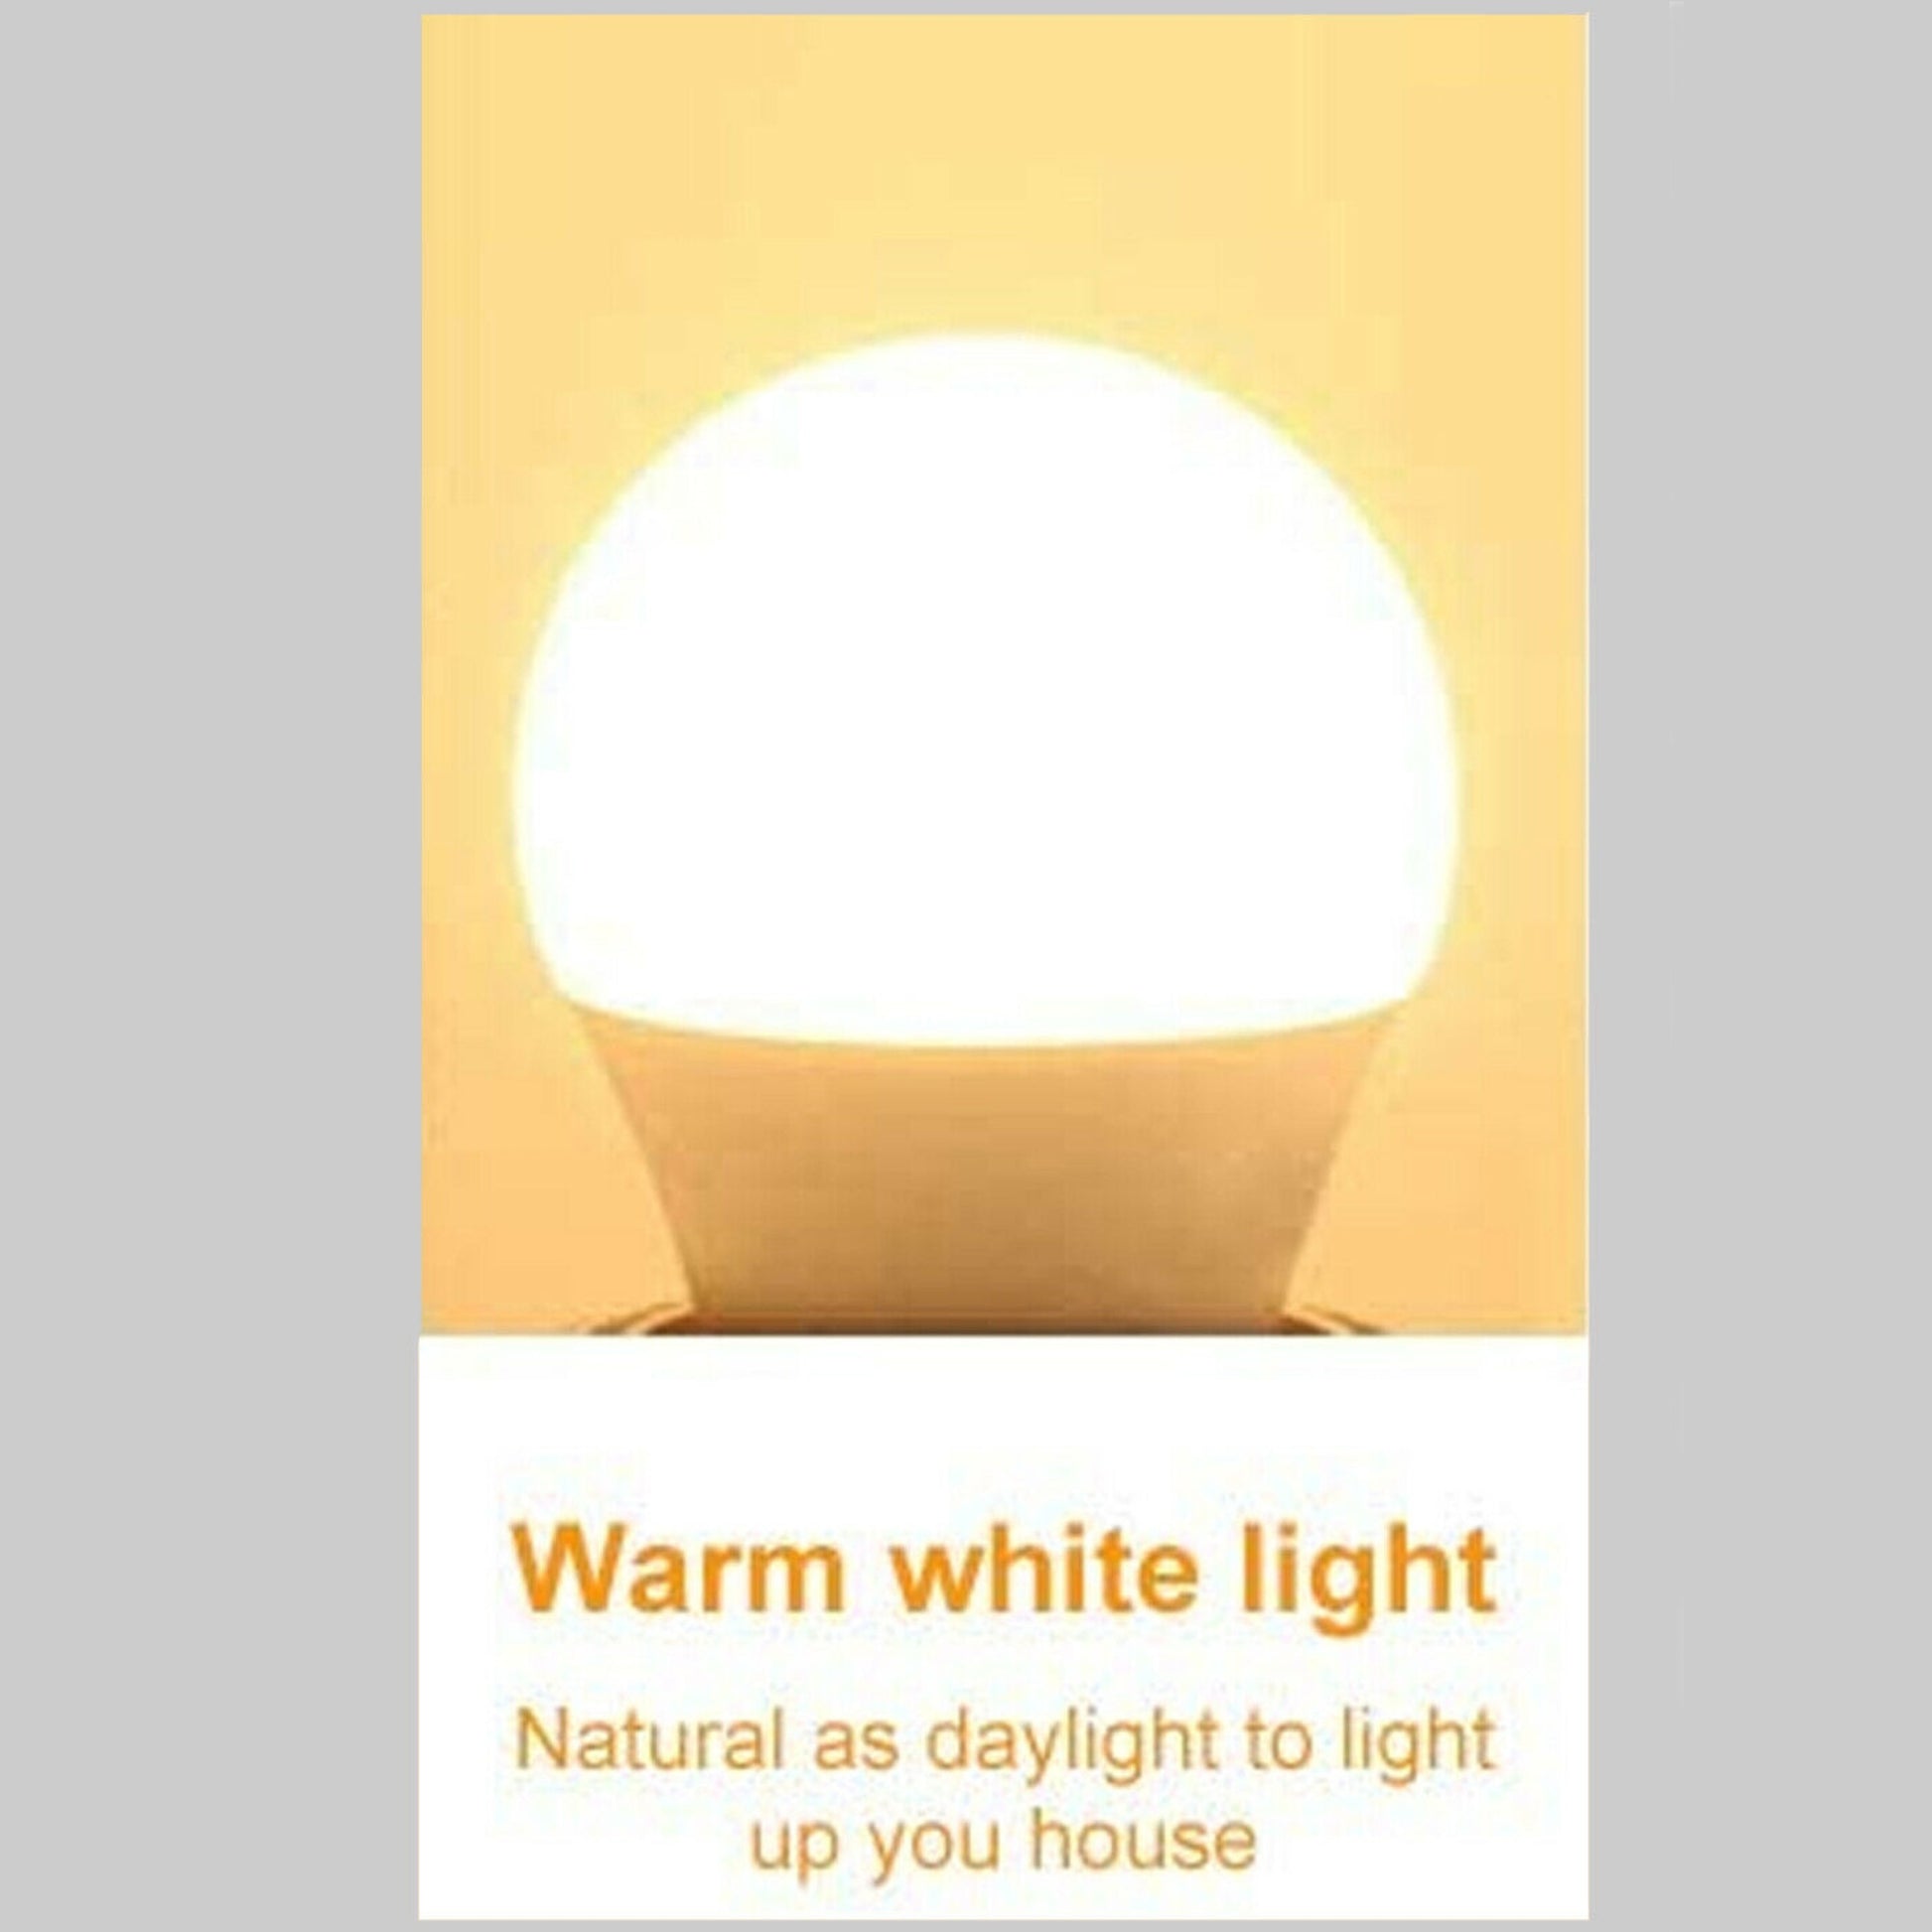 9W B22 Light Bulb Energy Saving Lamp Warm White Globe~1372 - LEDSone UK Ltd